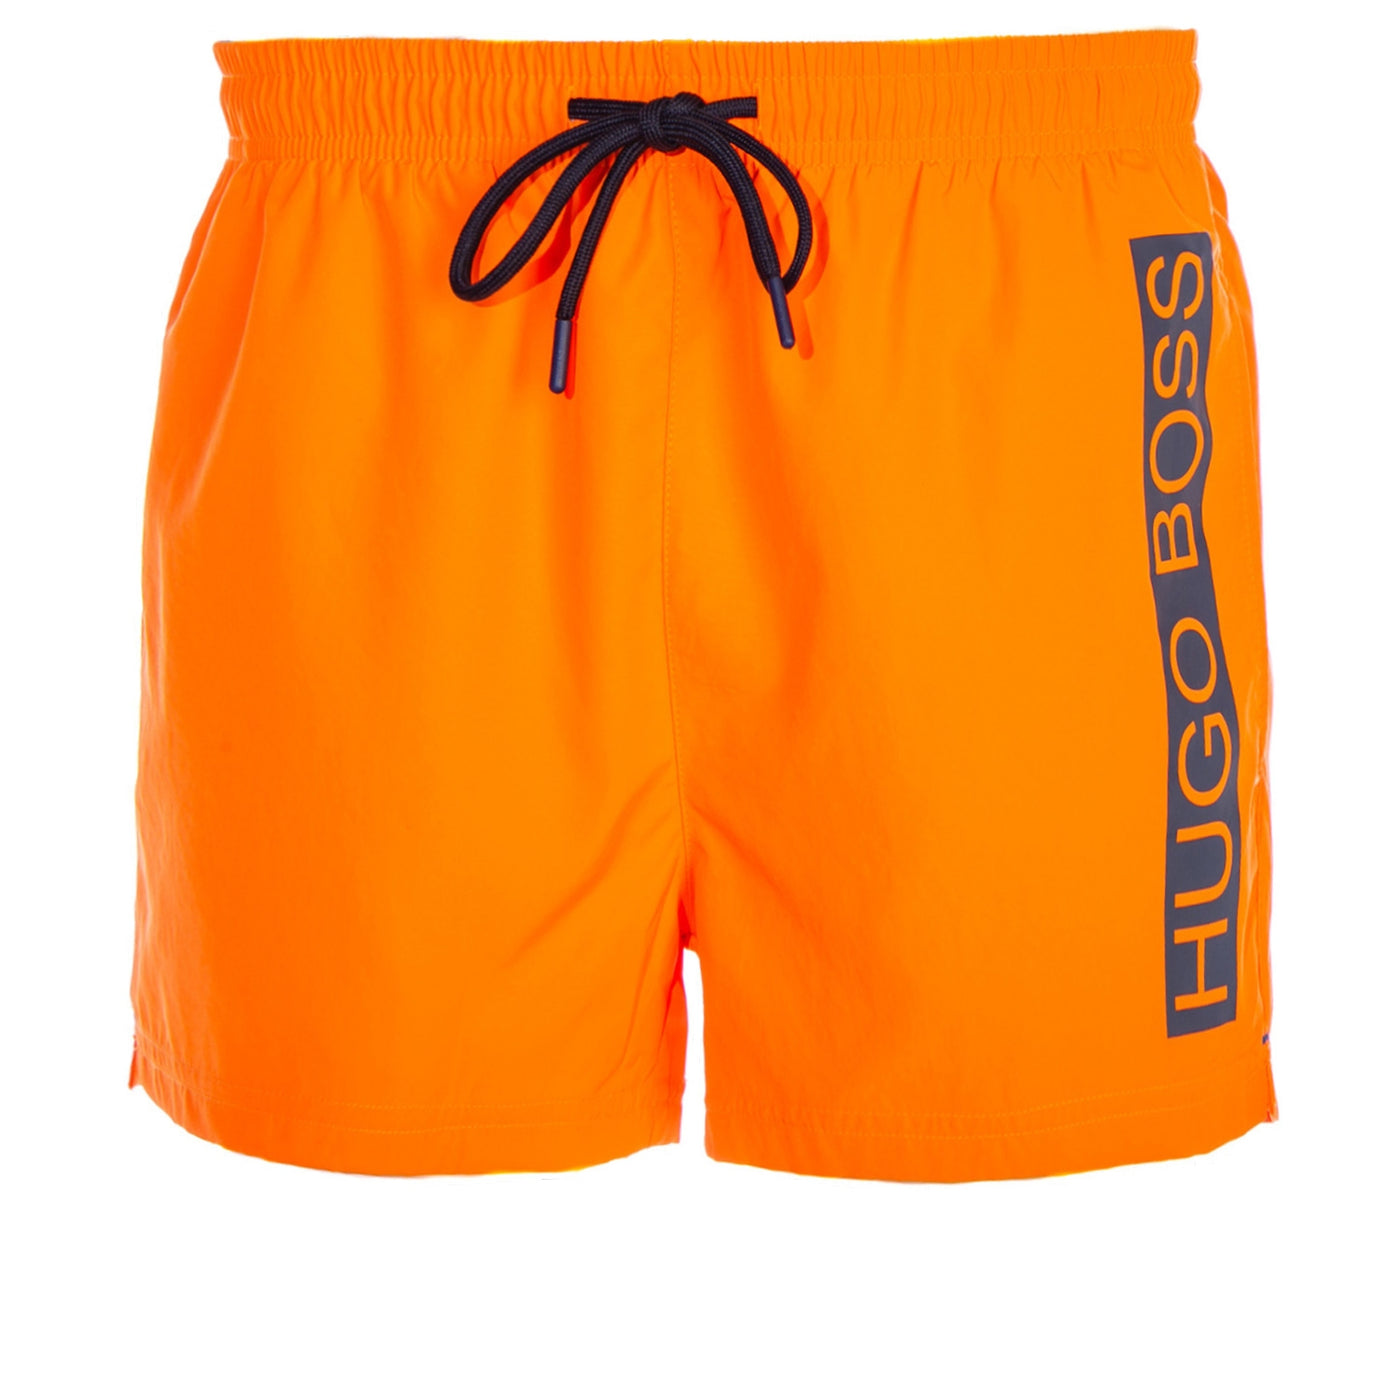 BOSS Mooneye Swim Short in Orange